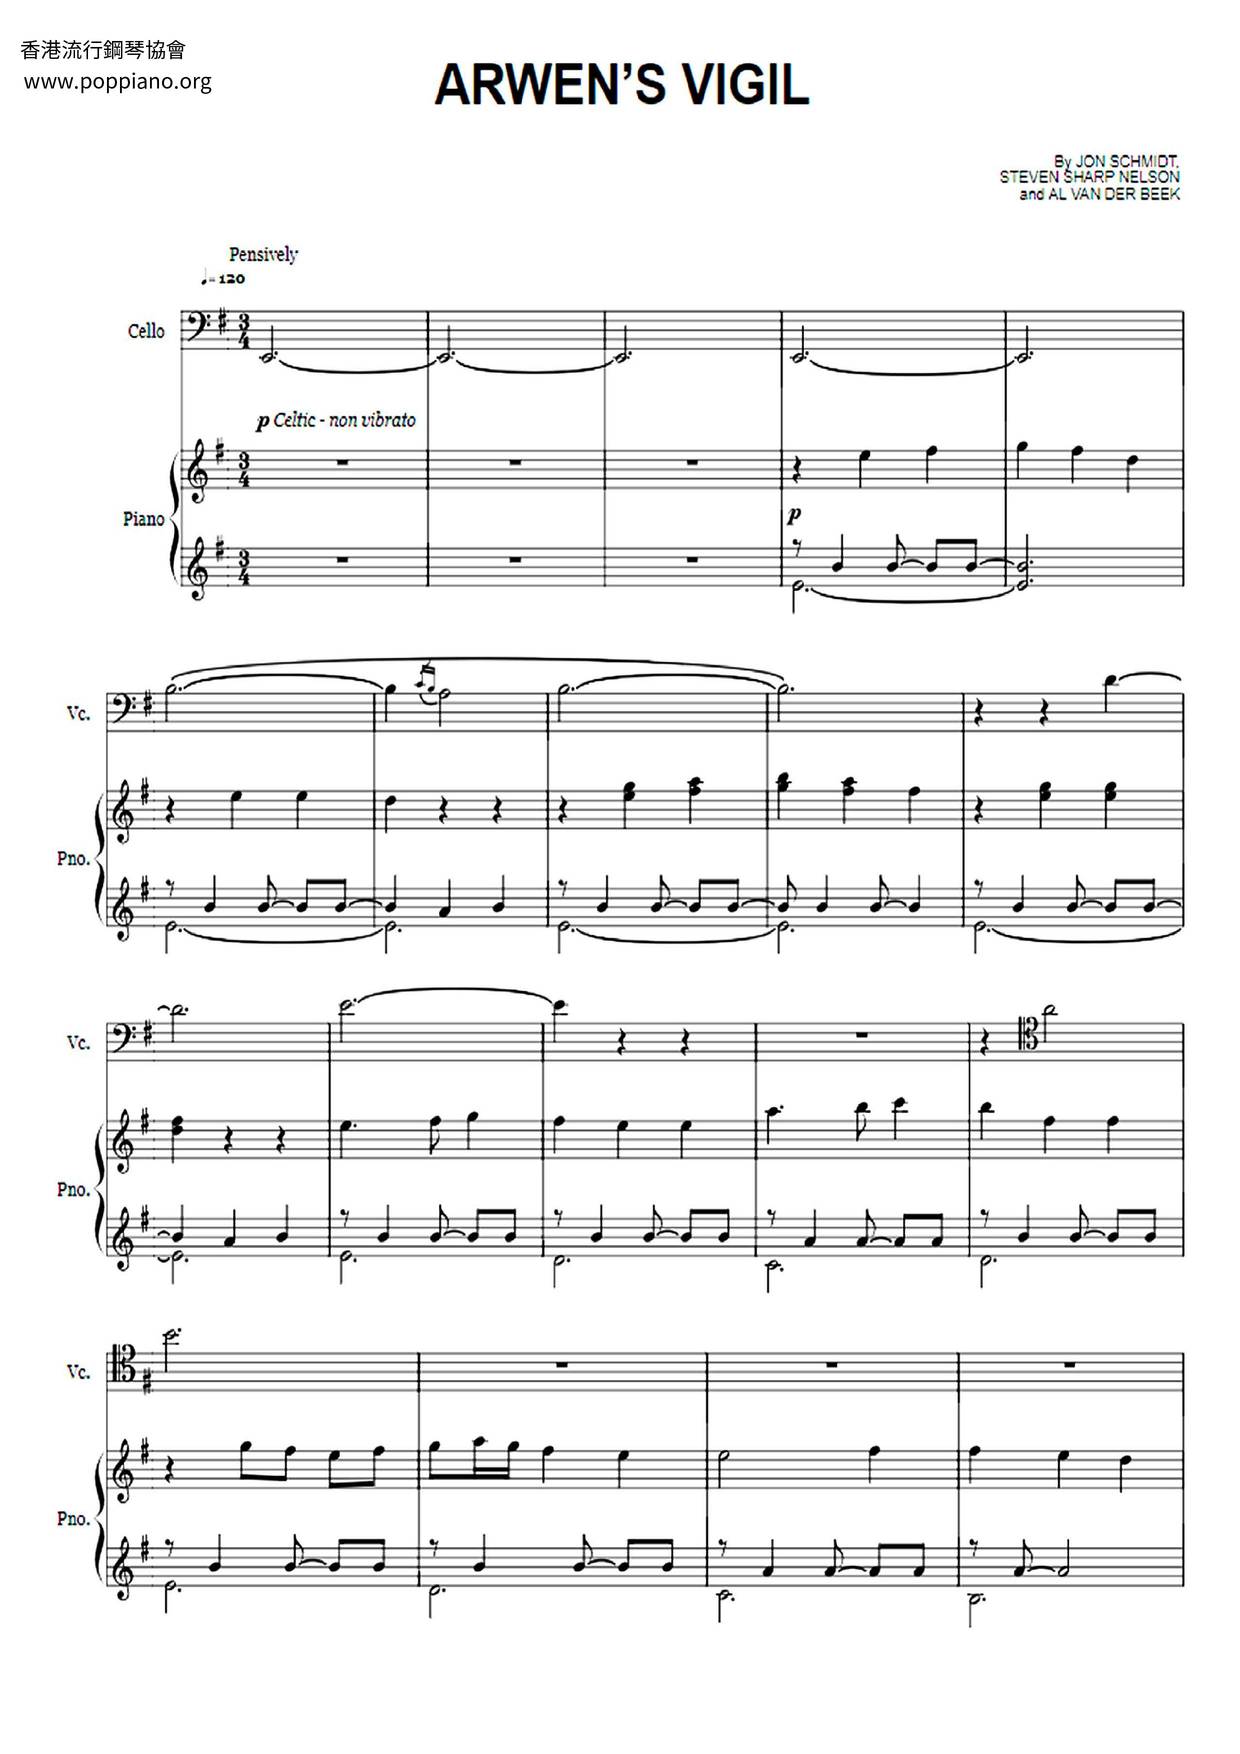 Arwen's Vigilピアノ譜